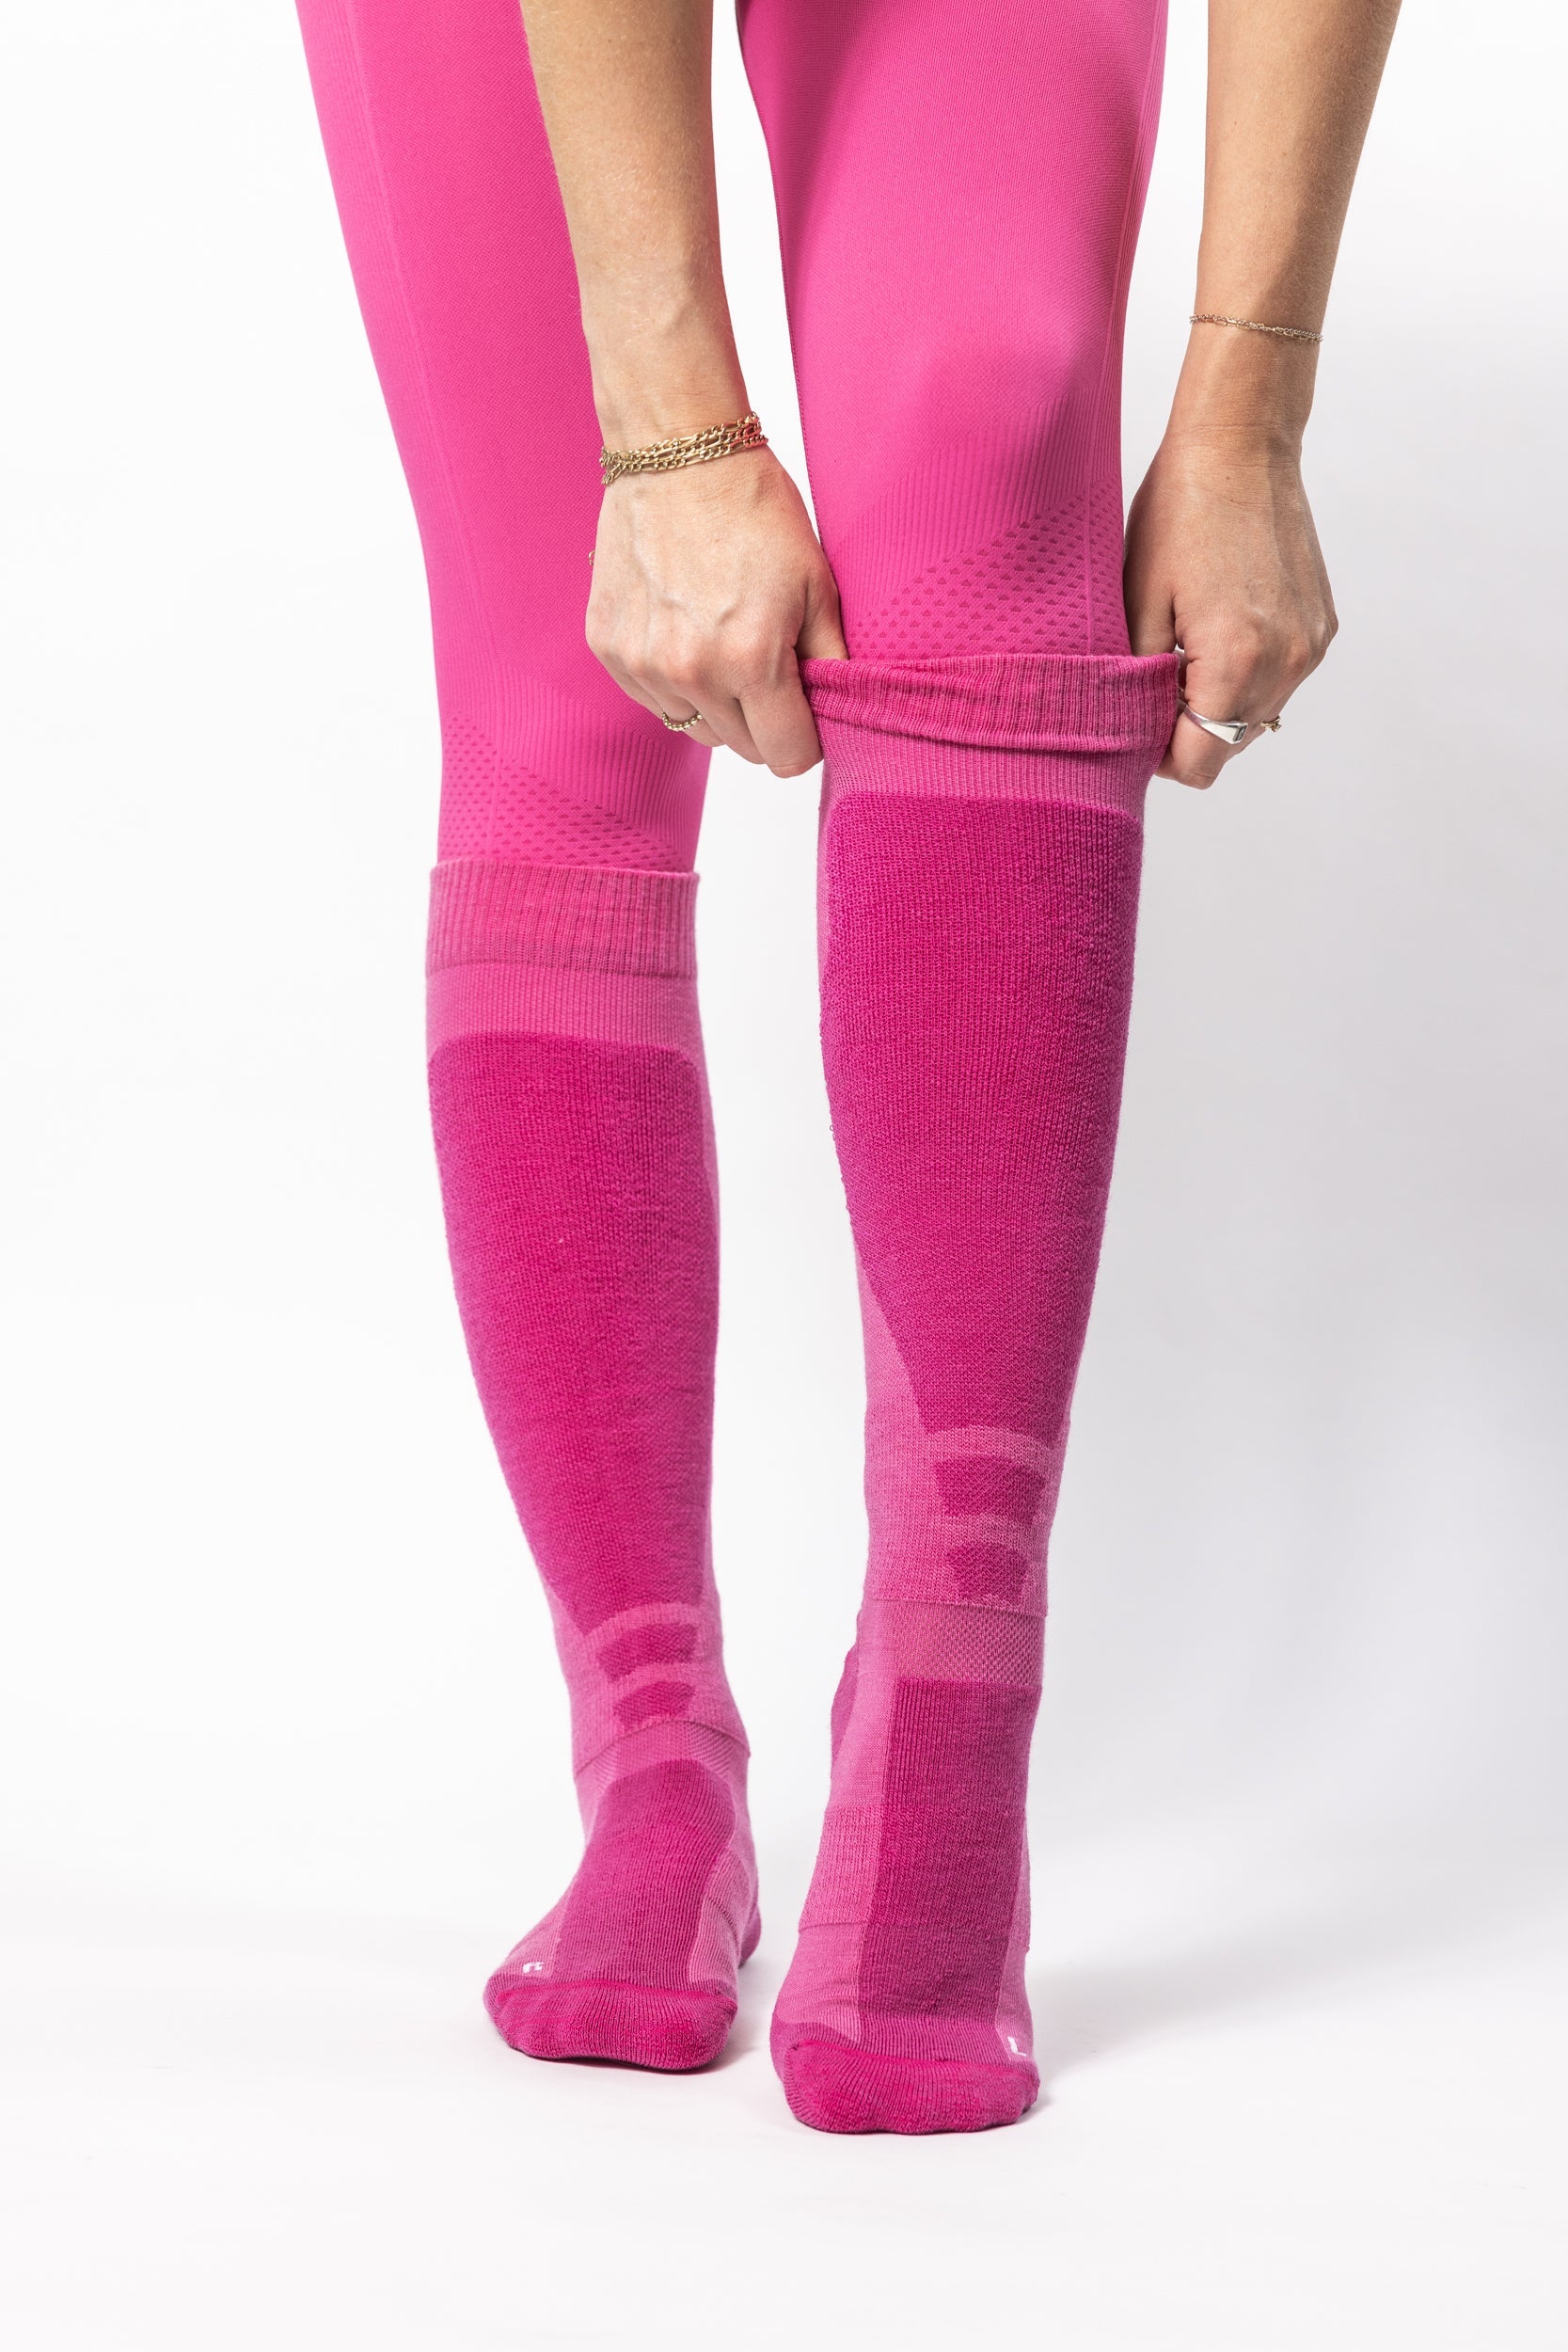 Halfdays Light Cushion Ski Sock - Pink/XS/S / Alpenglow